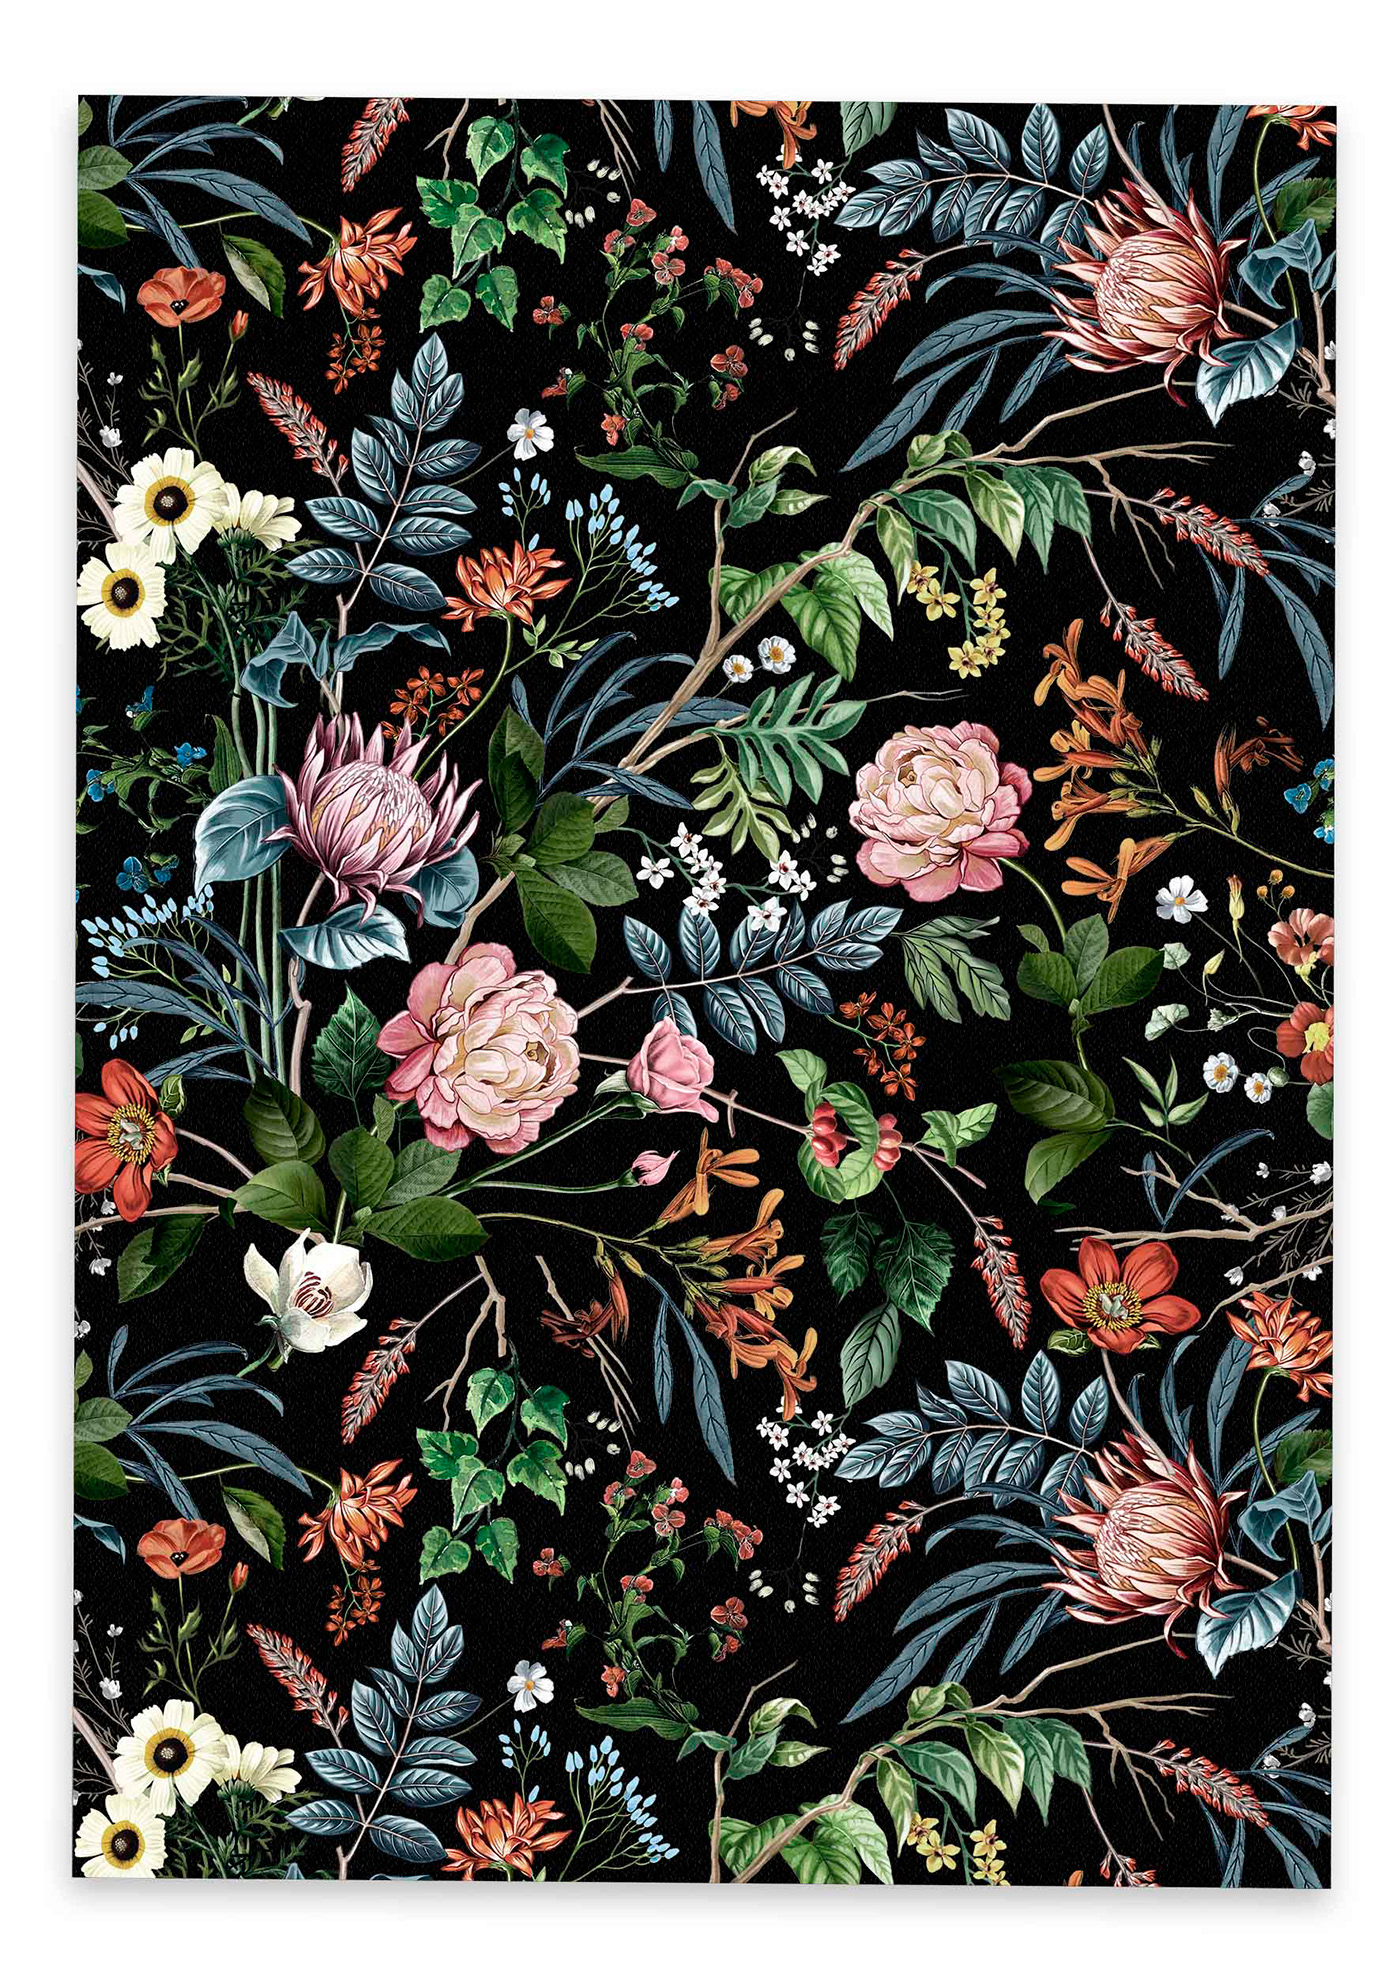 Flowers pattern fabric design ILLUSTRATION  flowers art handmade textile design 